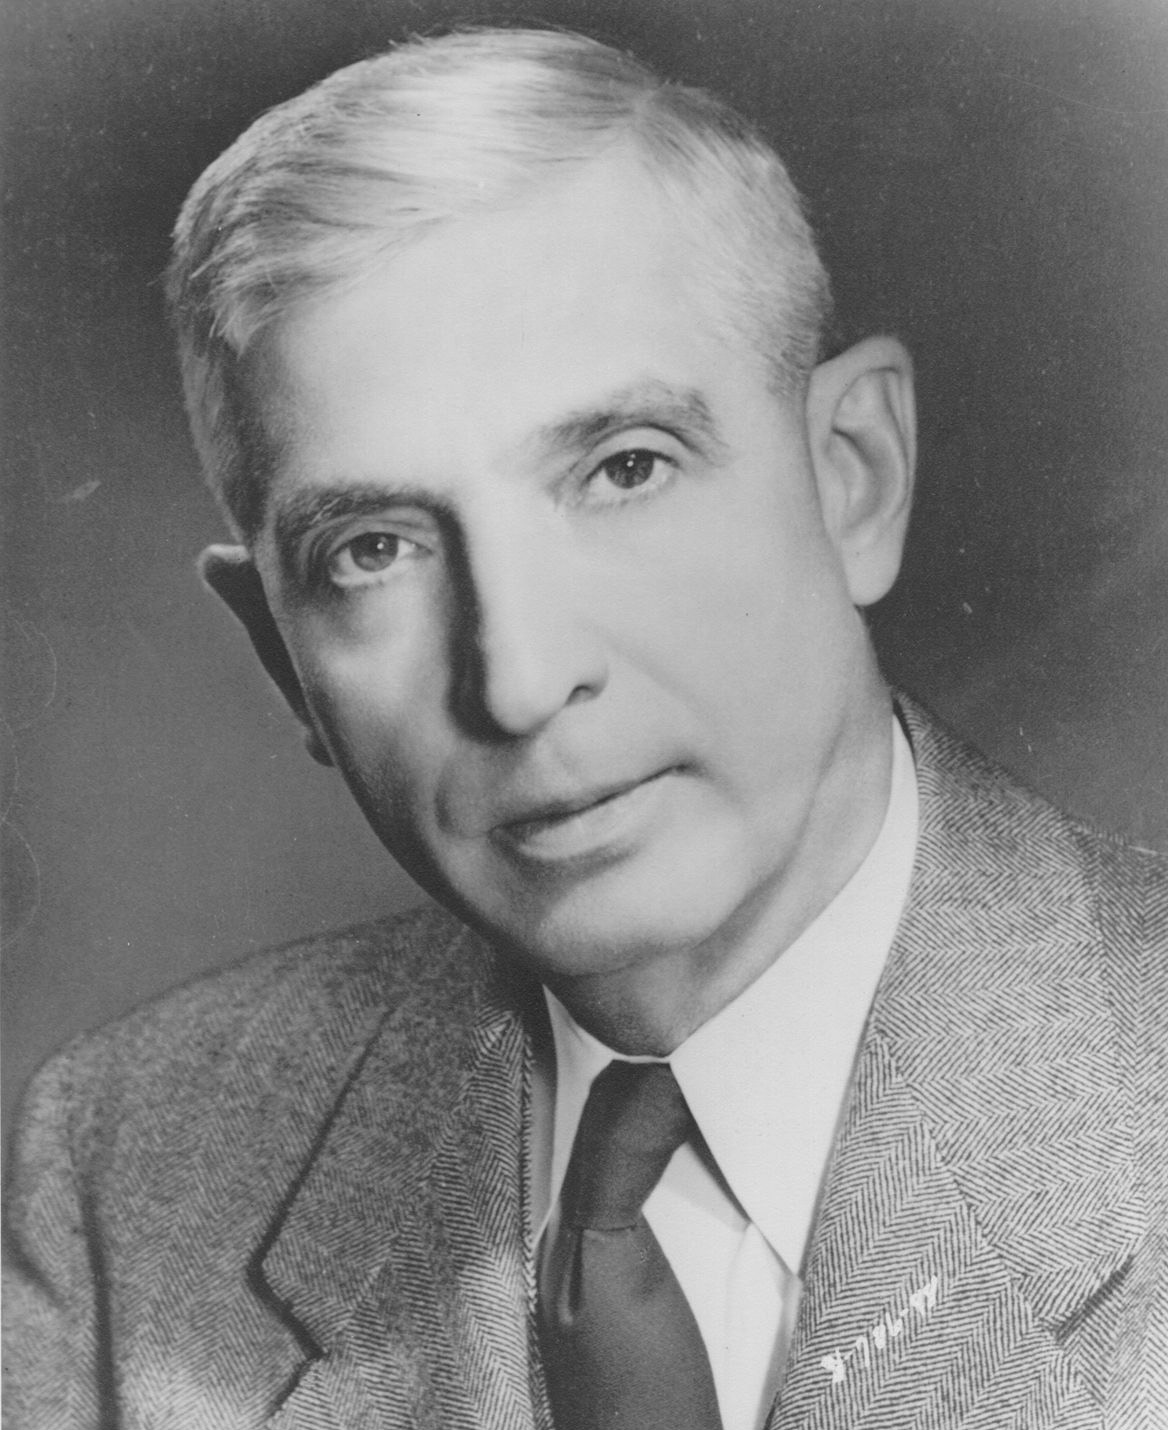 William E. Kemp